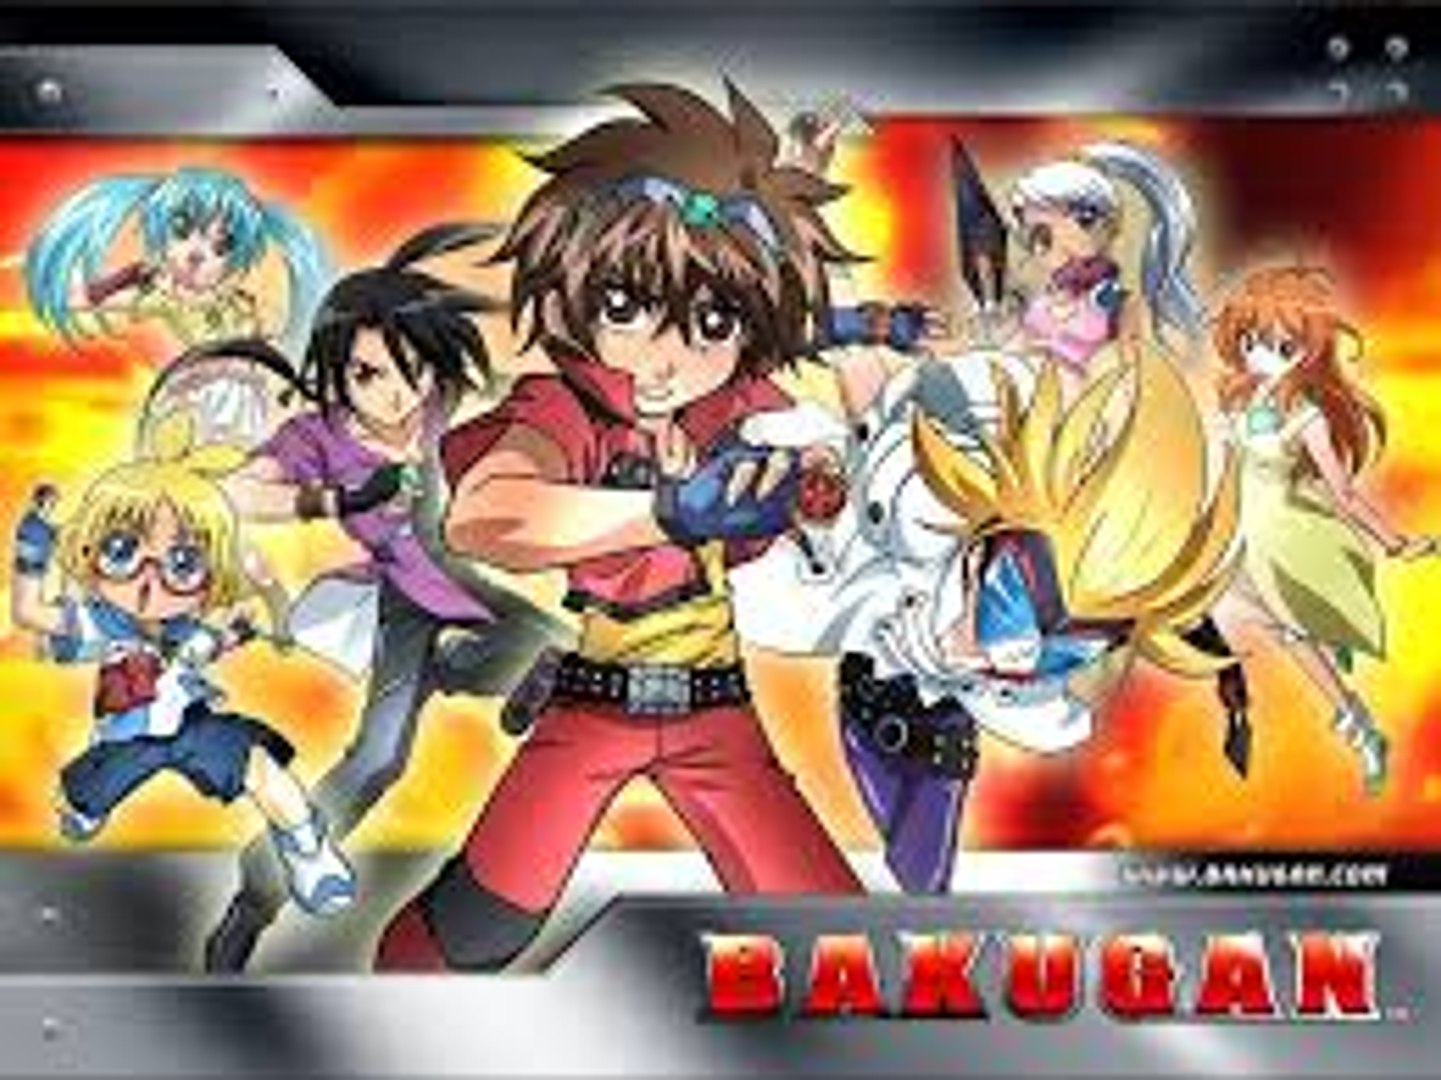 Bakugan Battle Brawlers Episode 32 Play Nice Runo! - video Dailymotion